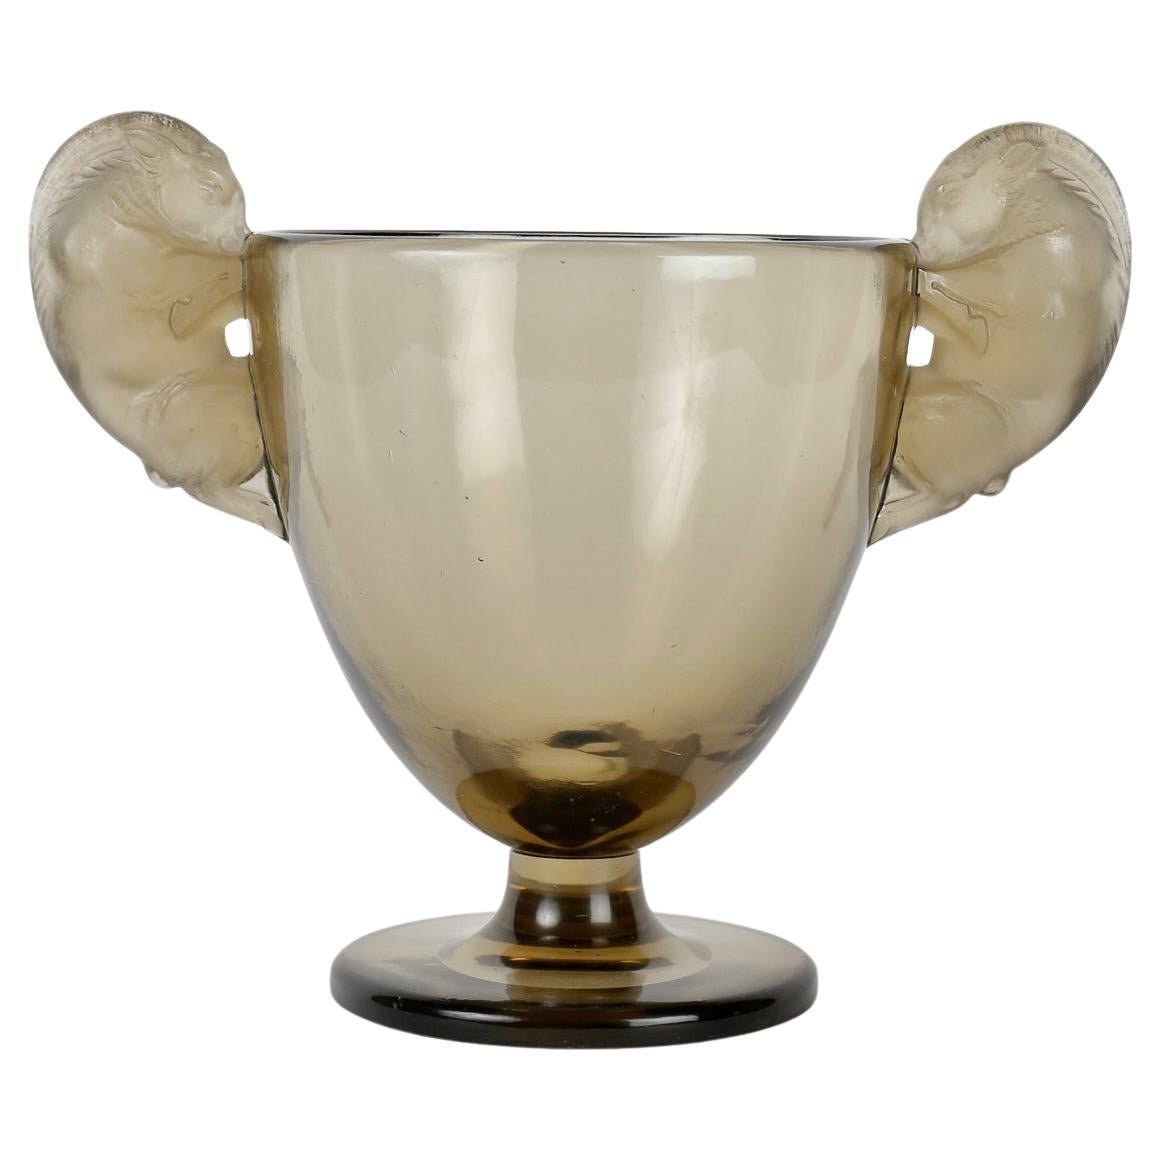 1925 Rene Lalique - Vase Beliers Vase Smoked Topaz Grey Glass